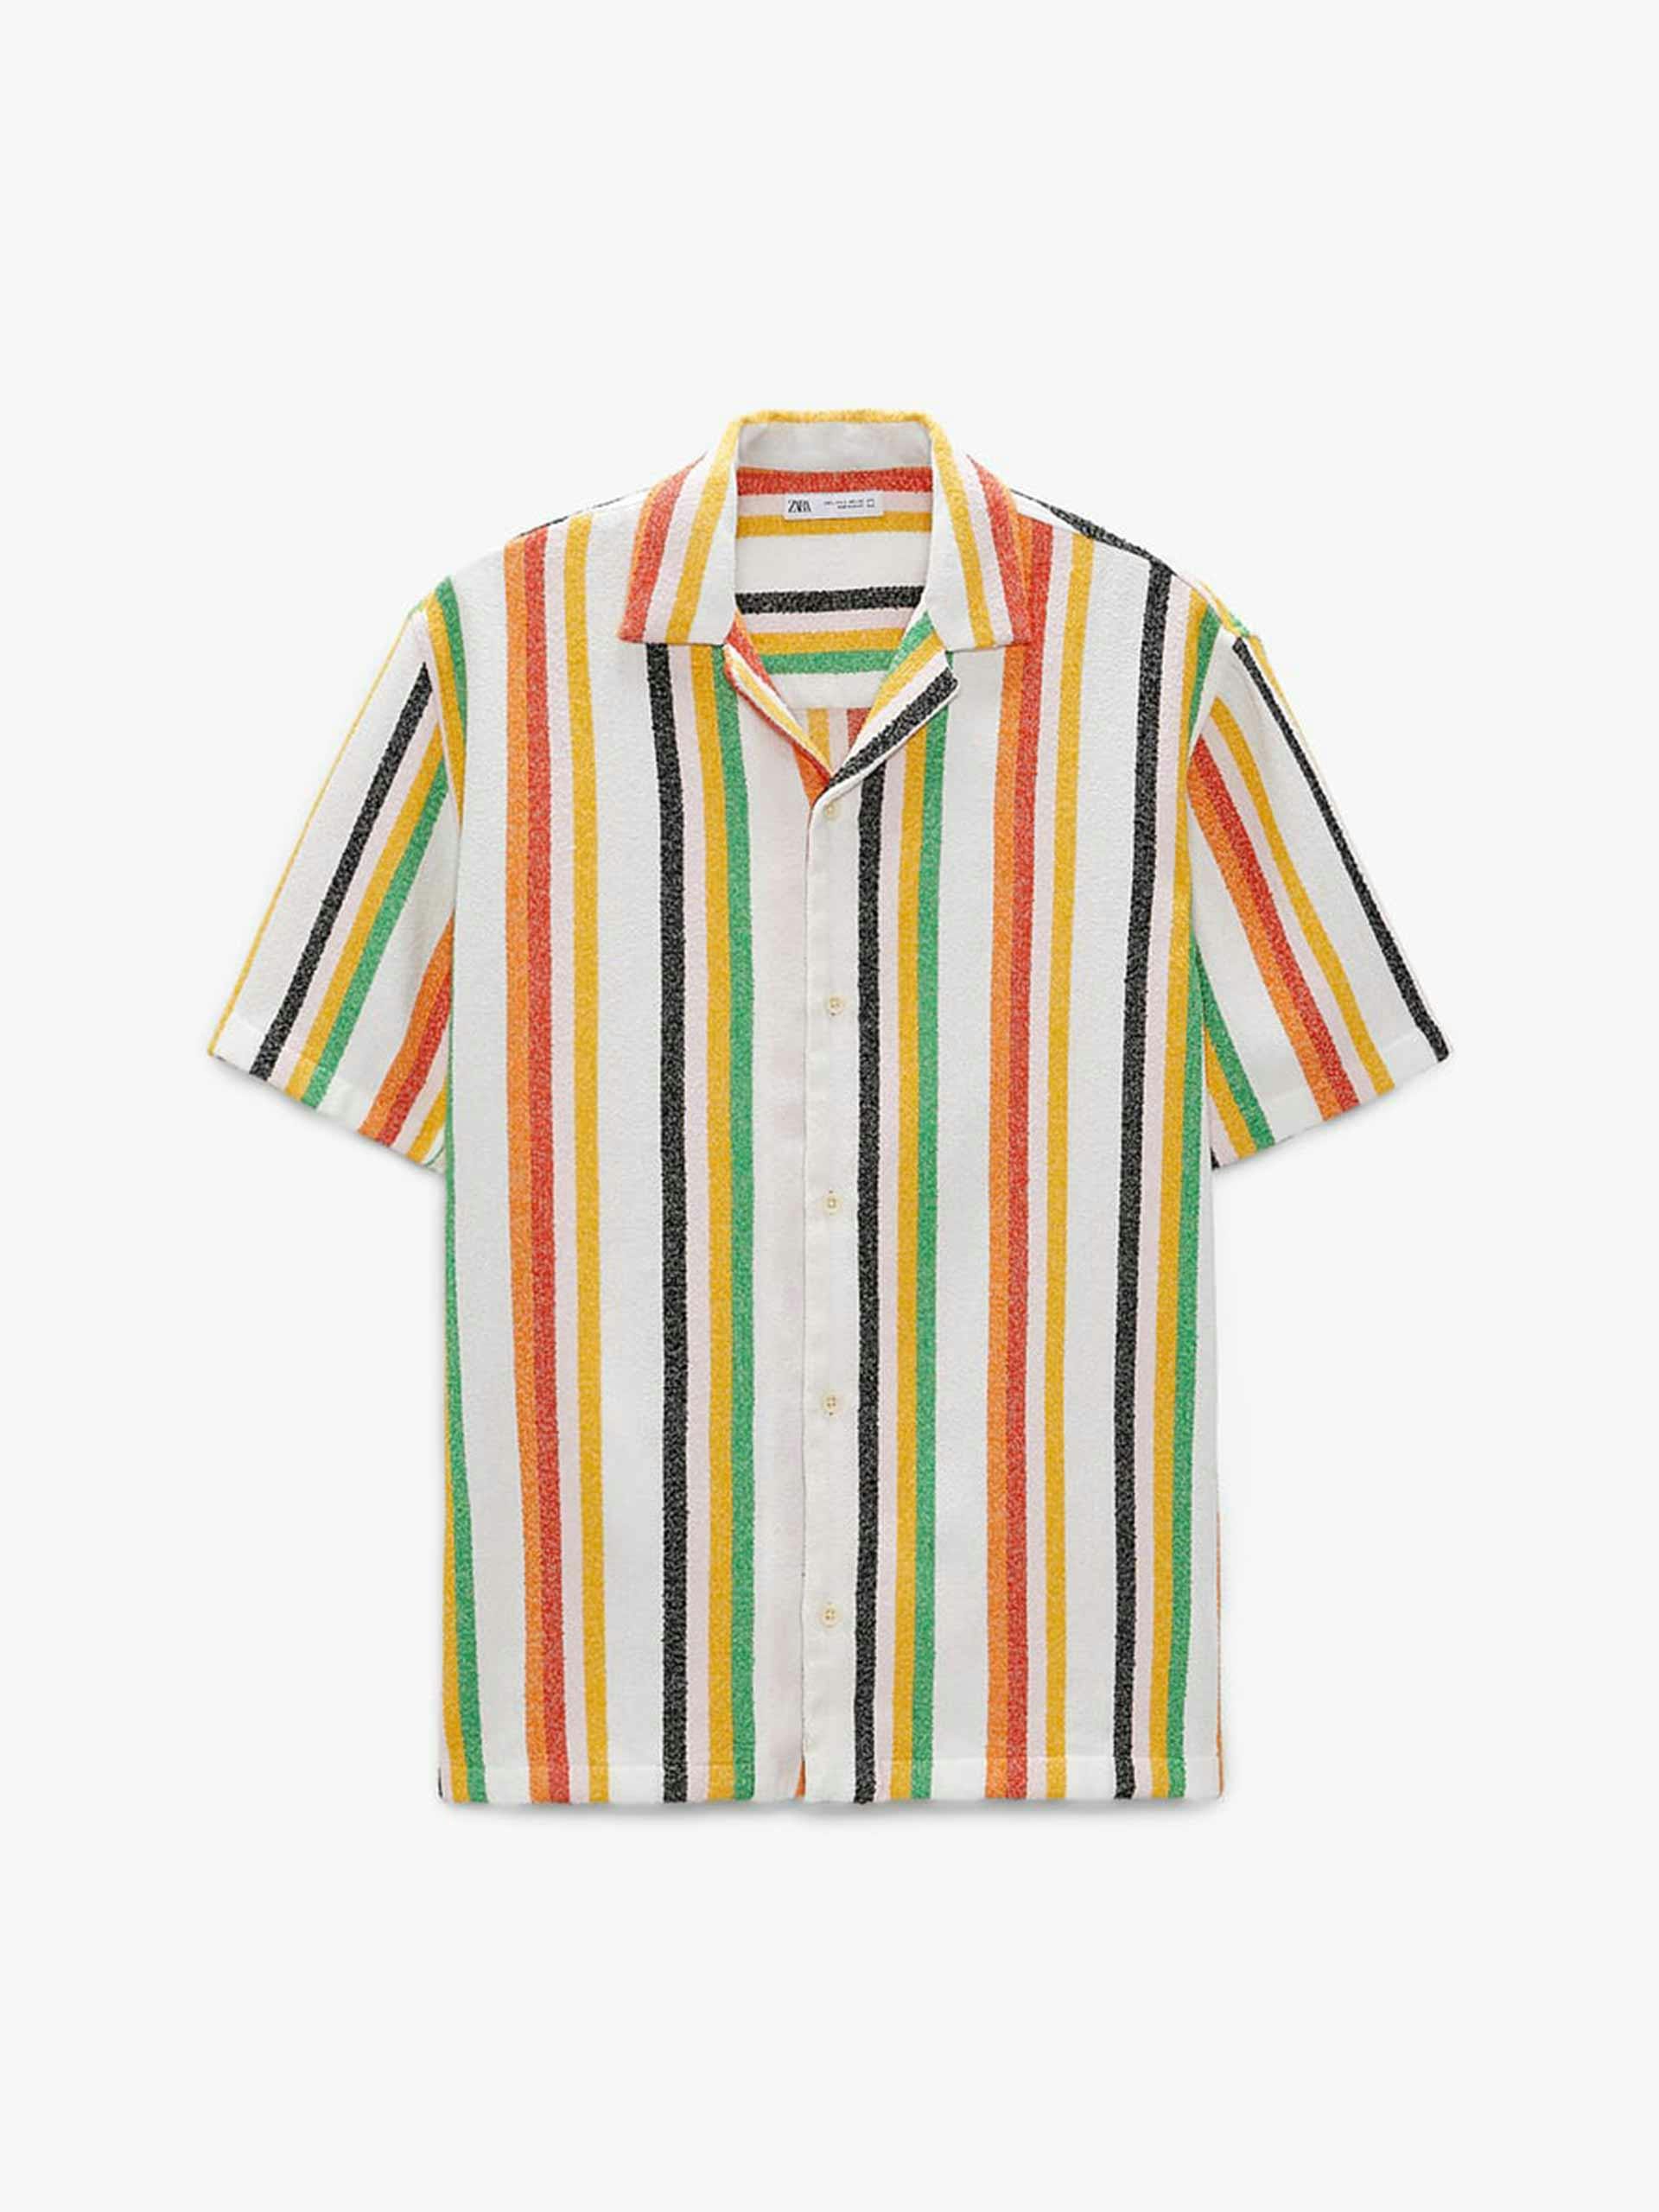 Multi striped textured shirt